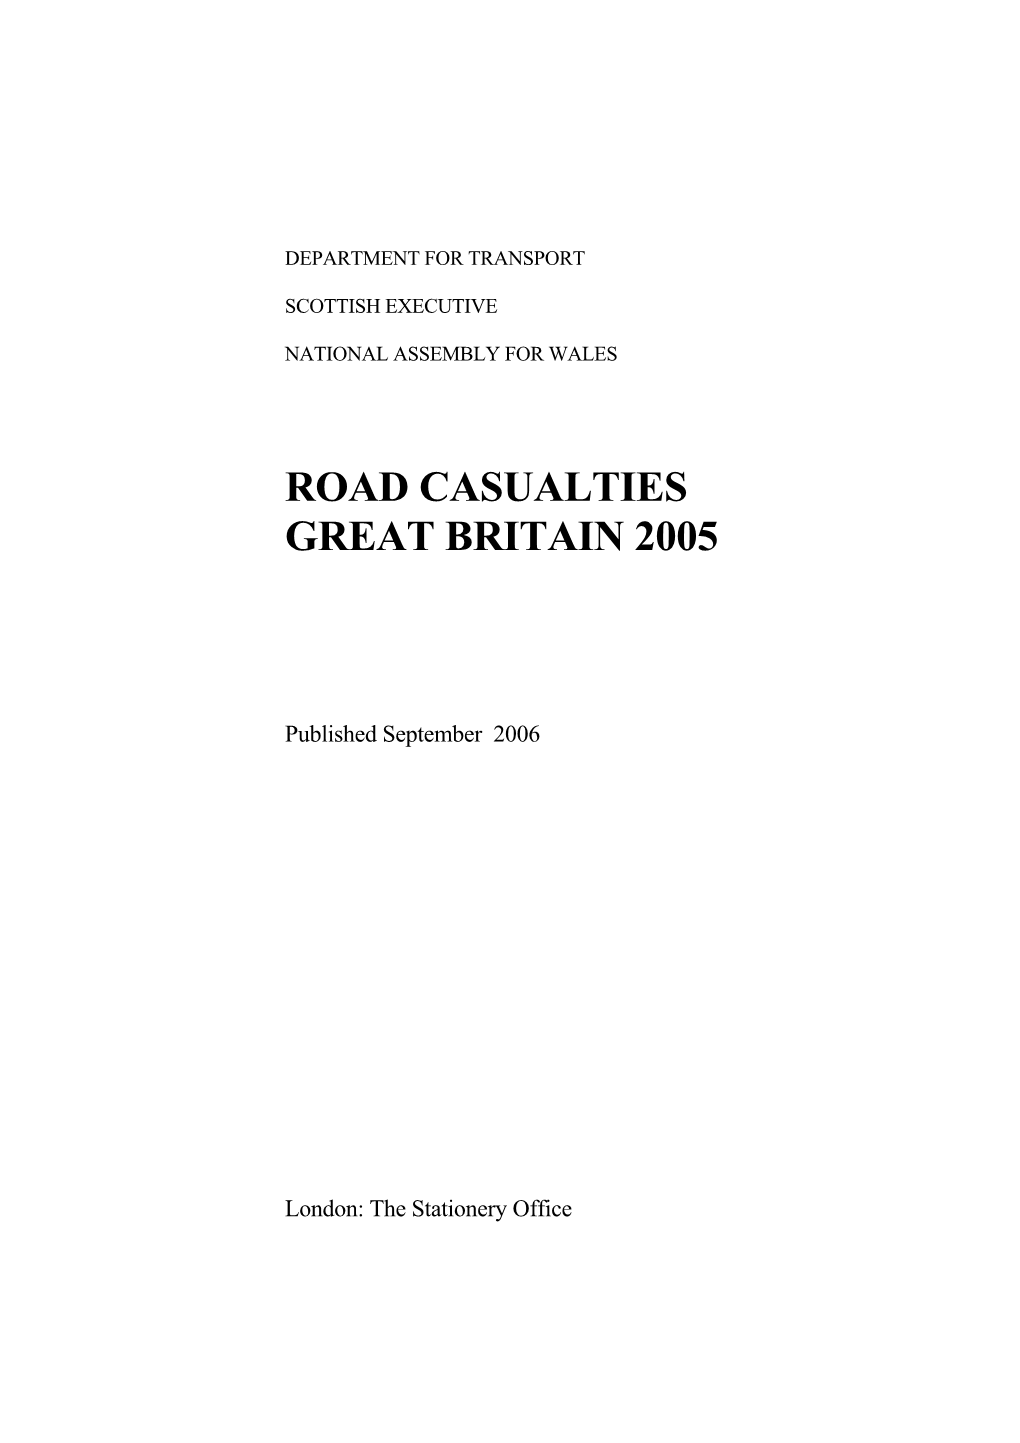 Road Casualties Great Britain 2005